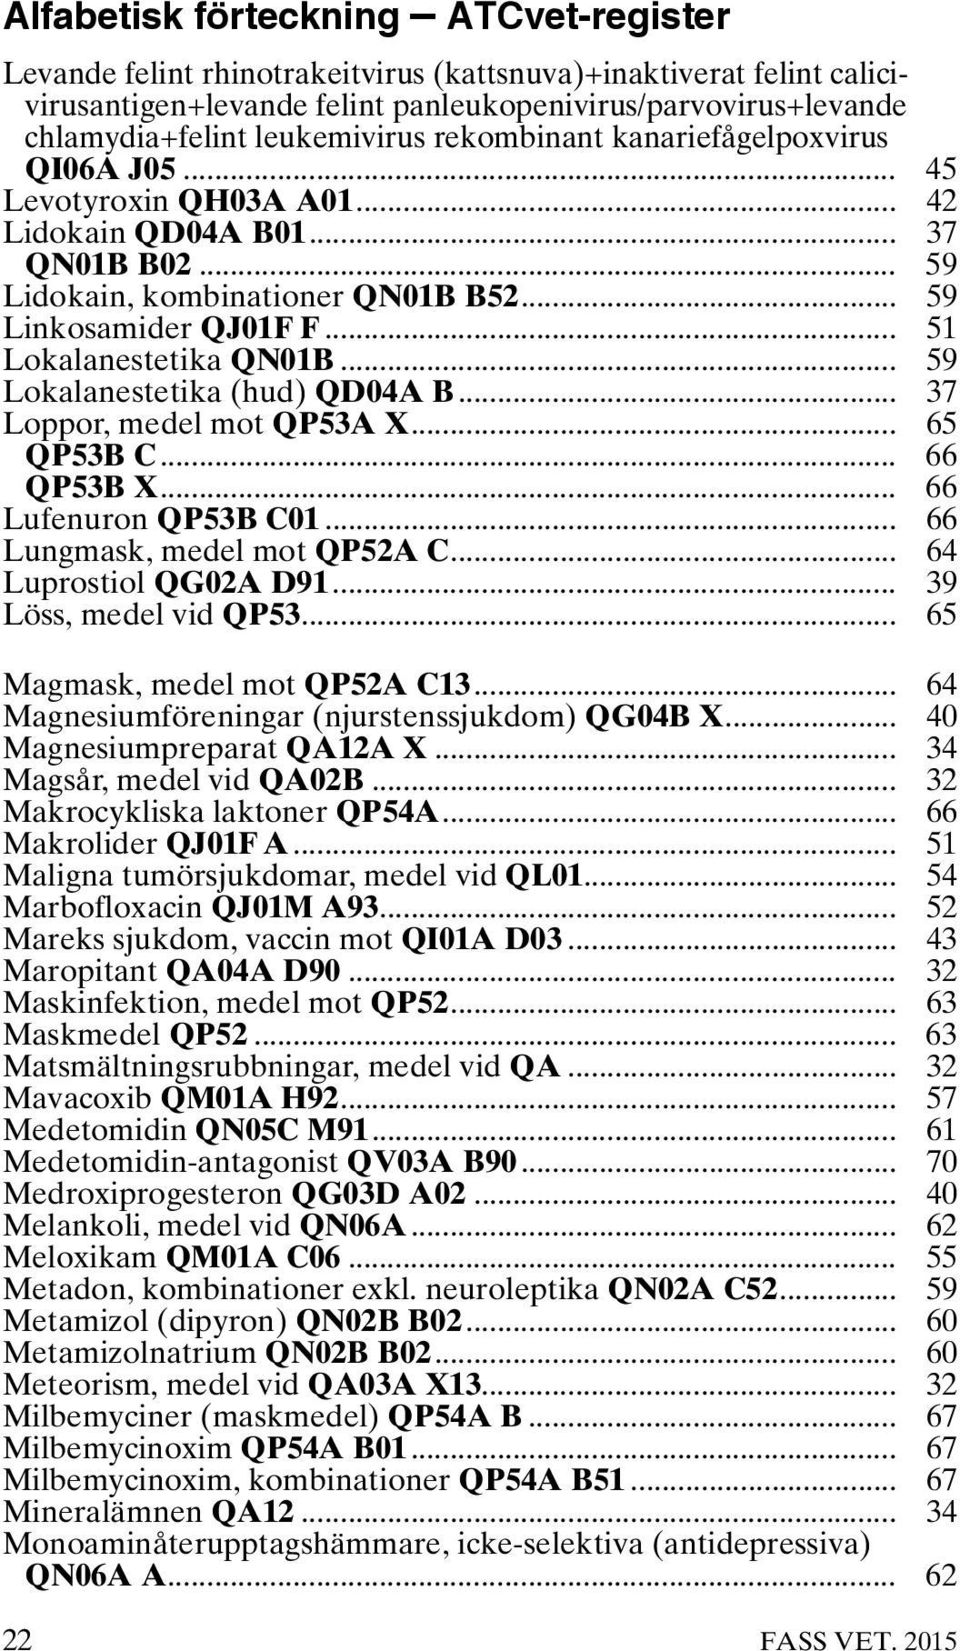 .. 51 Lokalanestetika QN01B... 59 Lokalanestetika (hud) QD04A B... 37 Loppor, medel mot QP53A X... 65 QP53B C... 66 QP53B X... 66 Lufenuron QP53B C01... 66 Lungmask, medel mot QP52A C.